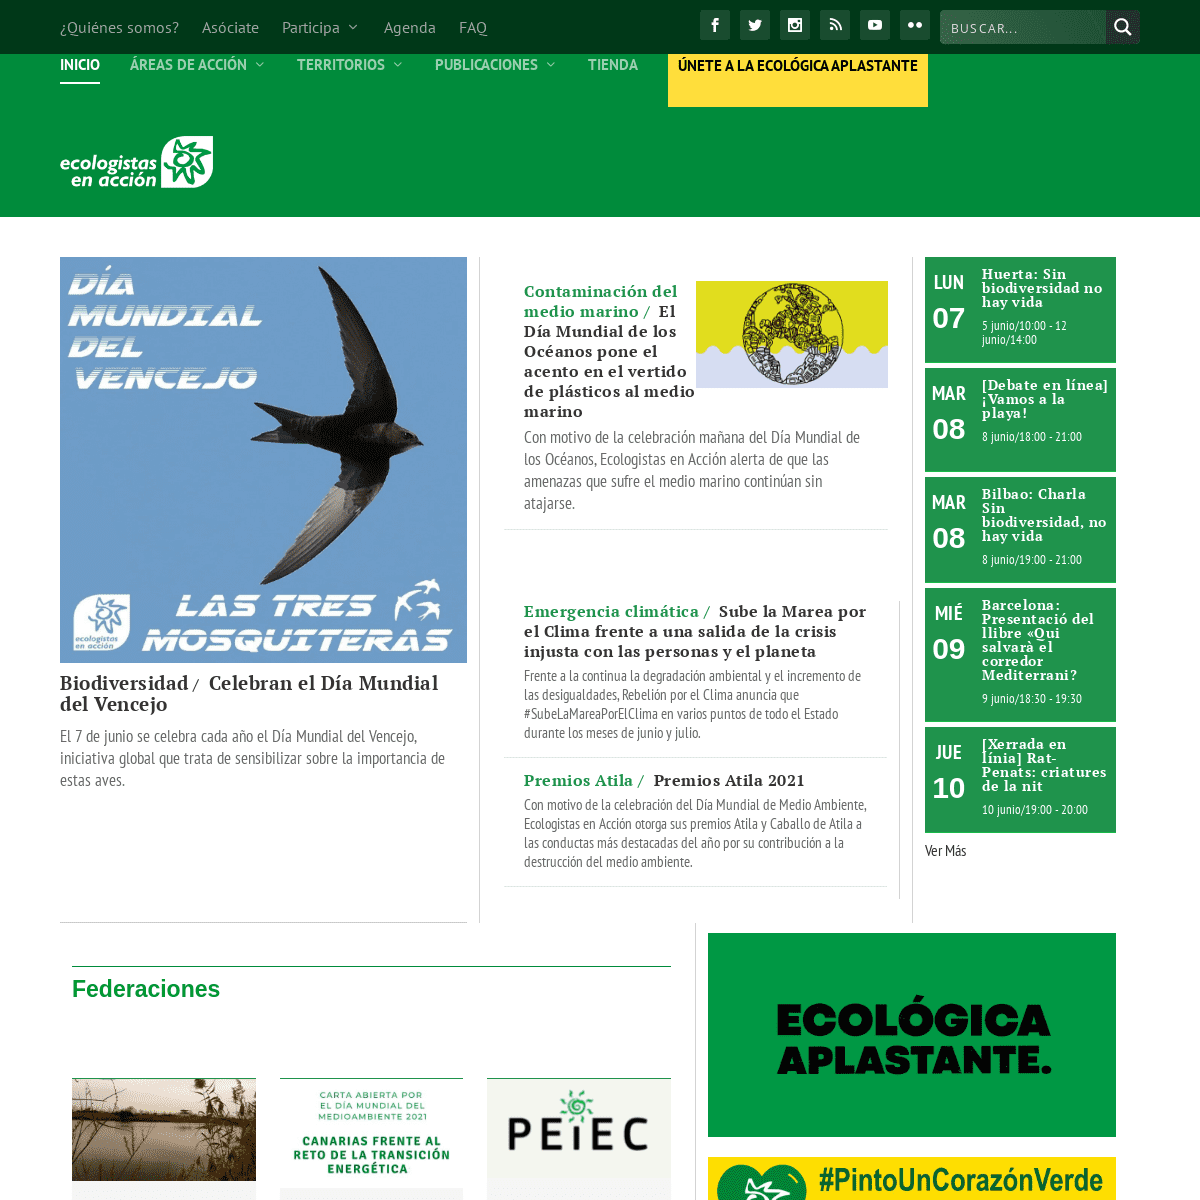 A complete backup of https://ecologistasenaccion.es